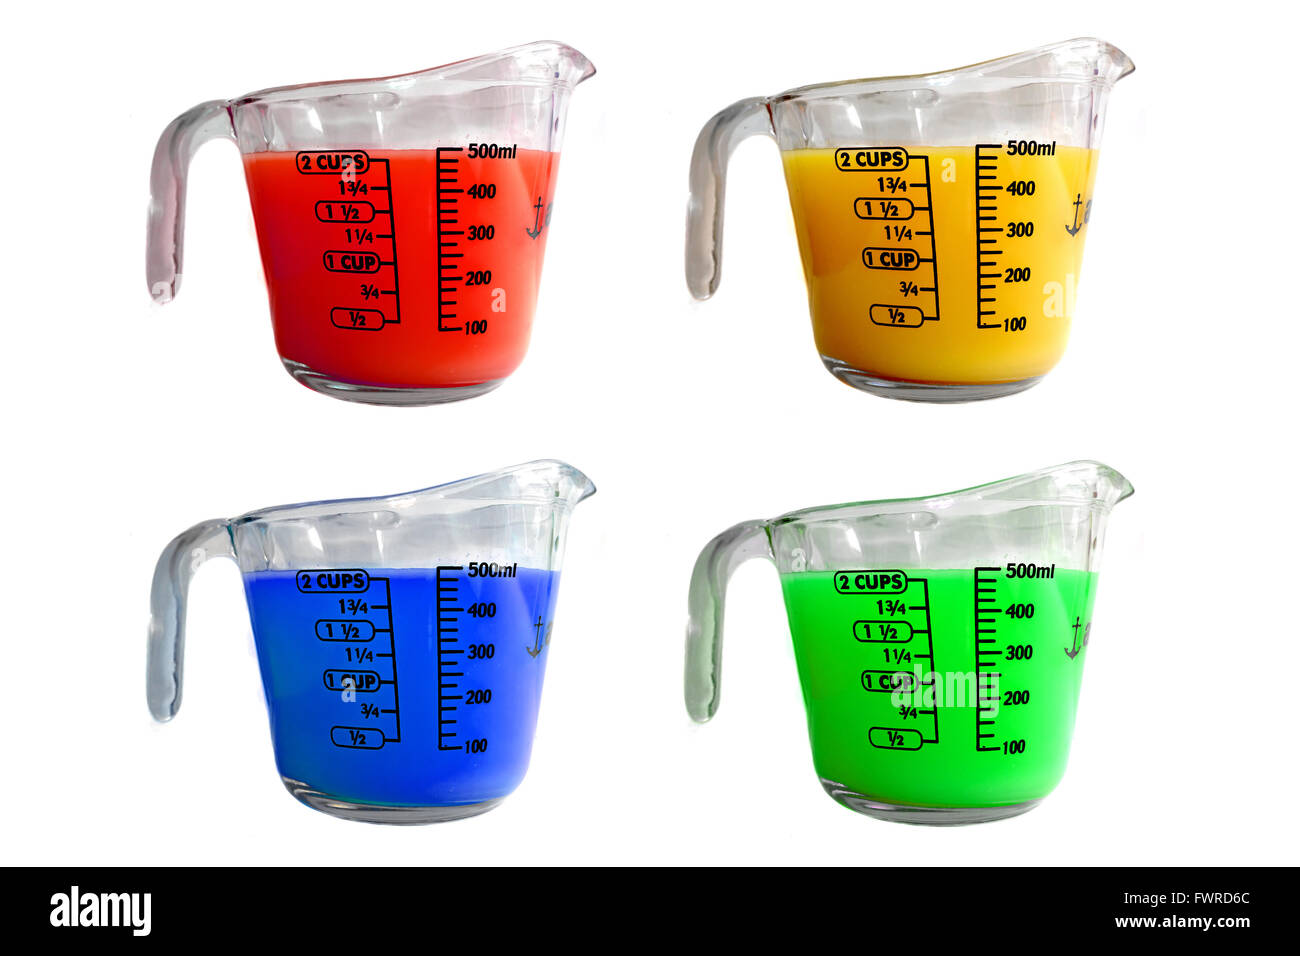 https://c8.alamy.com/comp/FWRD6C/four-measuring-jugs-filled-with-different-coloured-liquids-photographed-FWRD6C.jpg